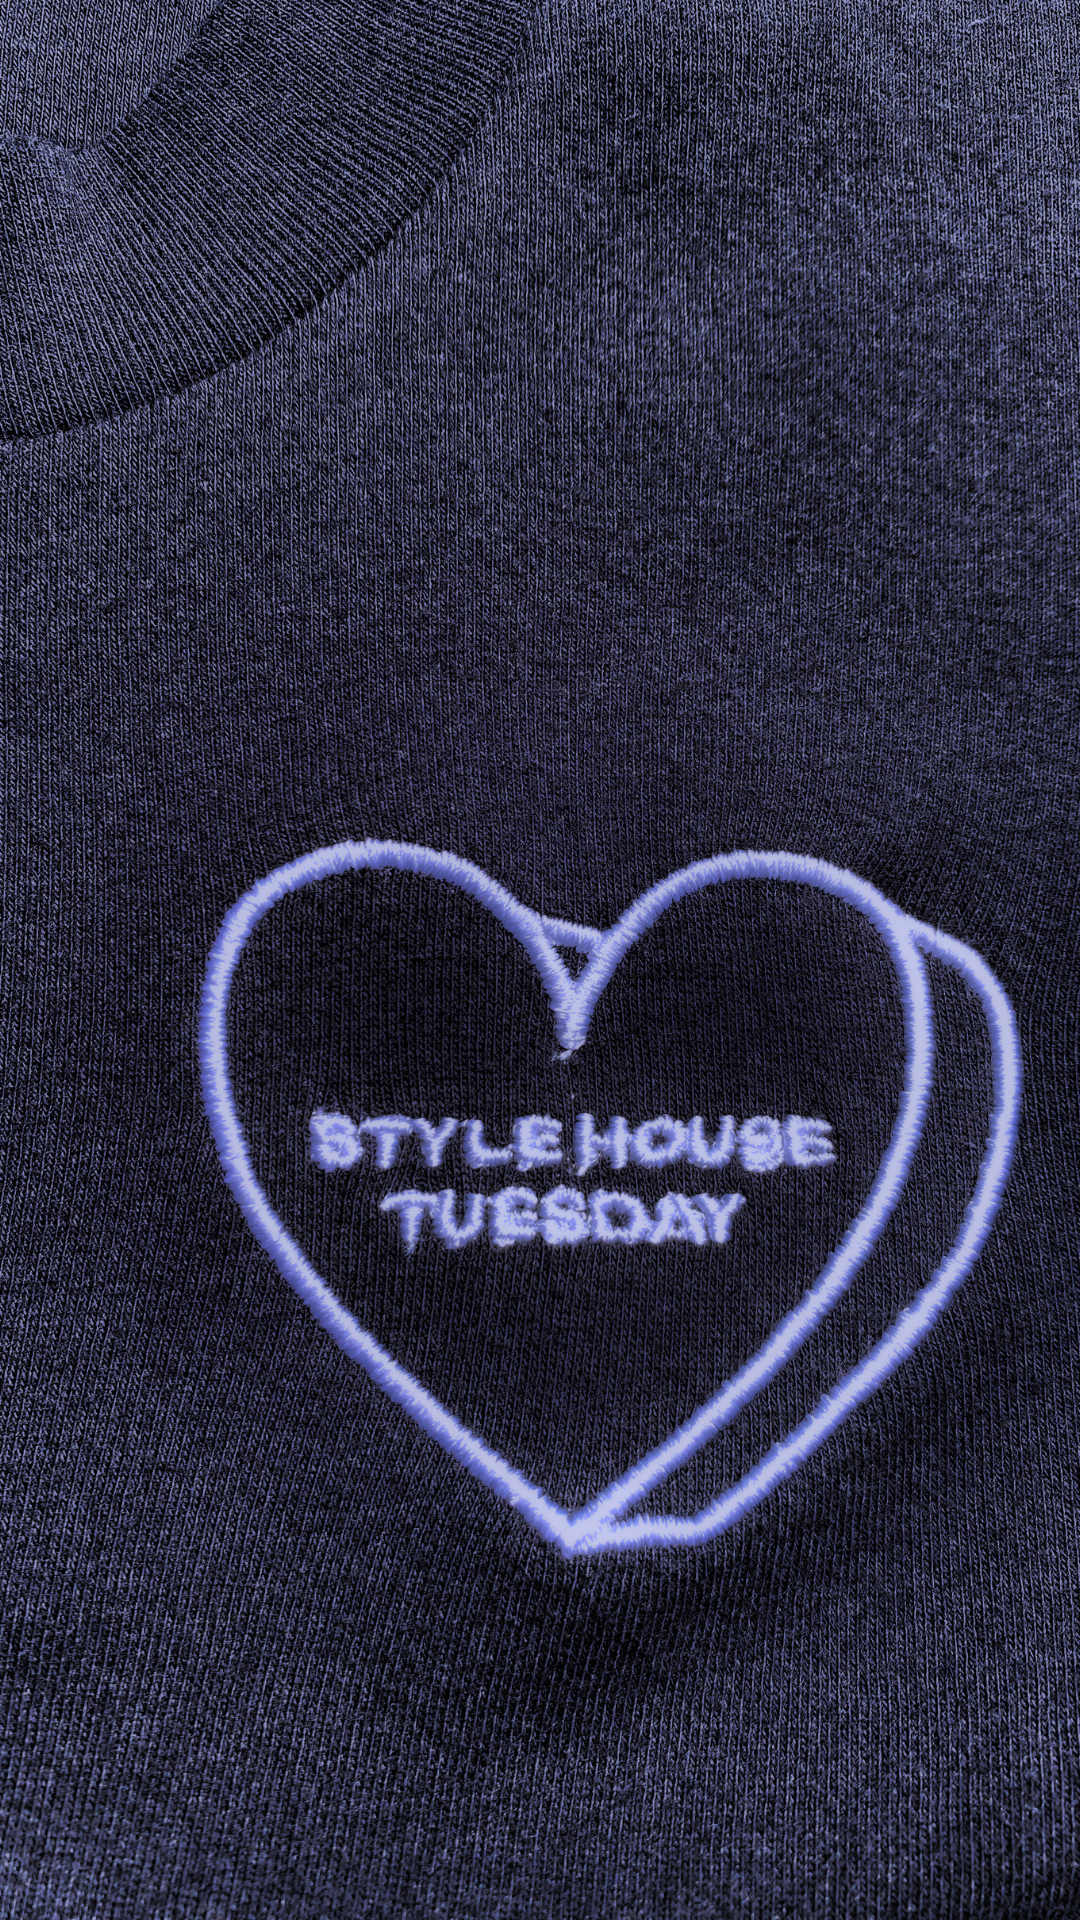 Style House Tuesday Mock Tee - Black